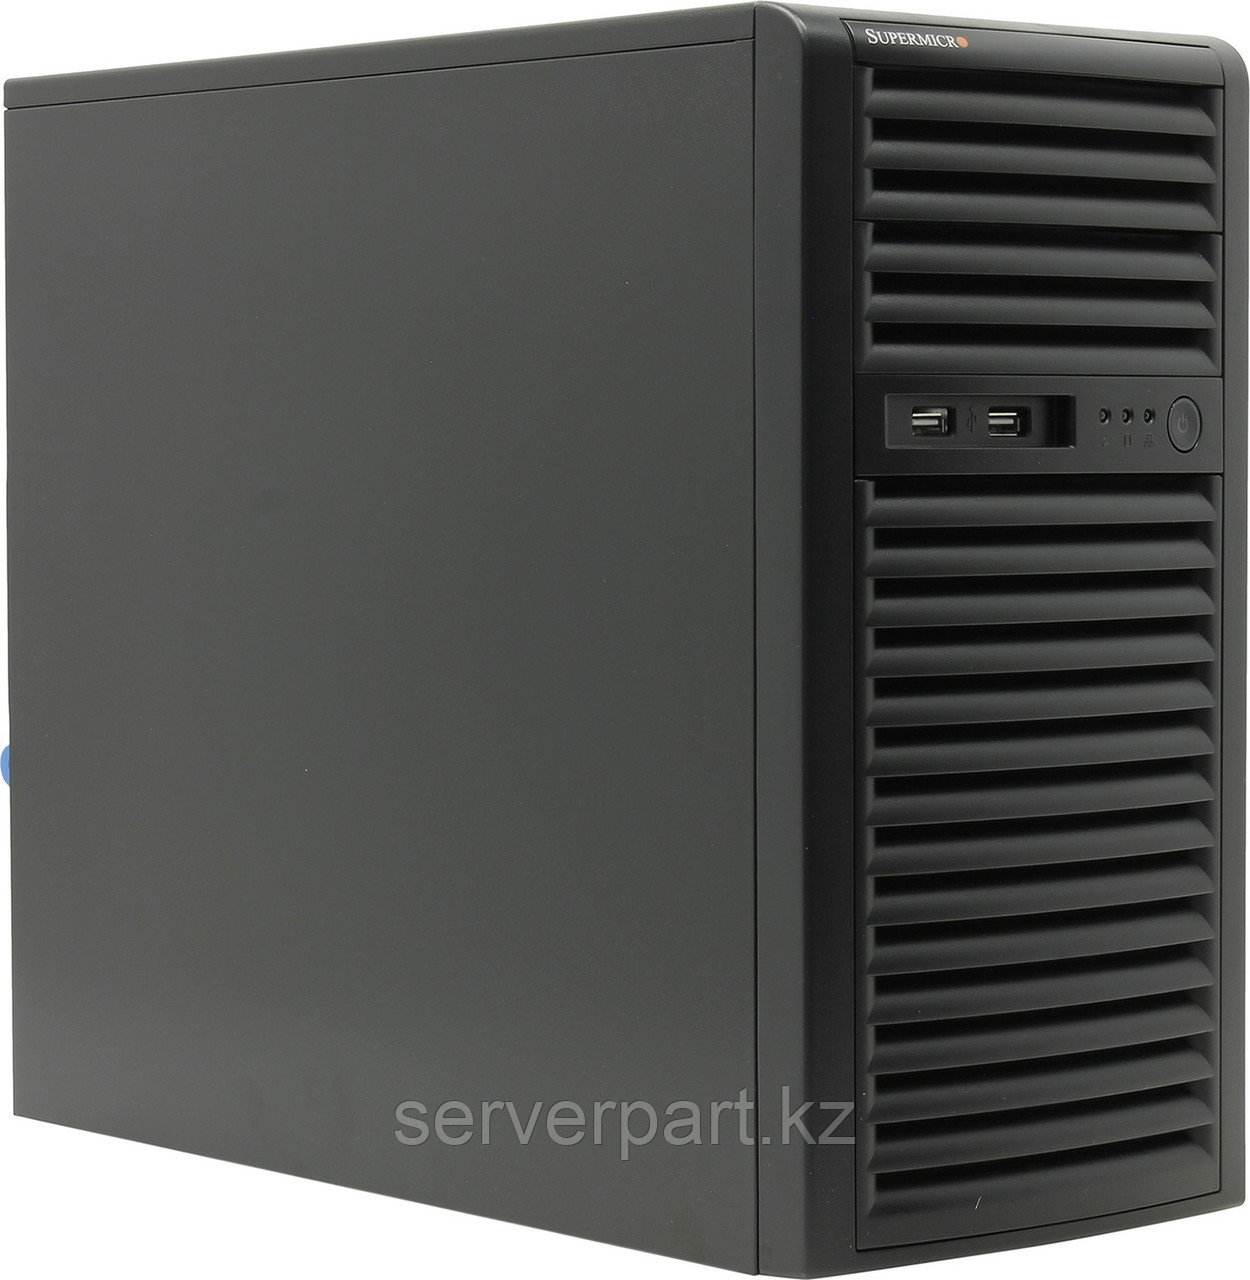 Сервер Supermicro 732-500B\X11SSL-F Tower 4LFF/4-core intel xeon E3-1230v6 3.5GHz/no RAM/no HDD nhp/RAID